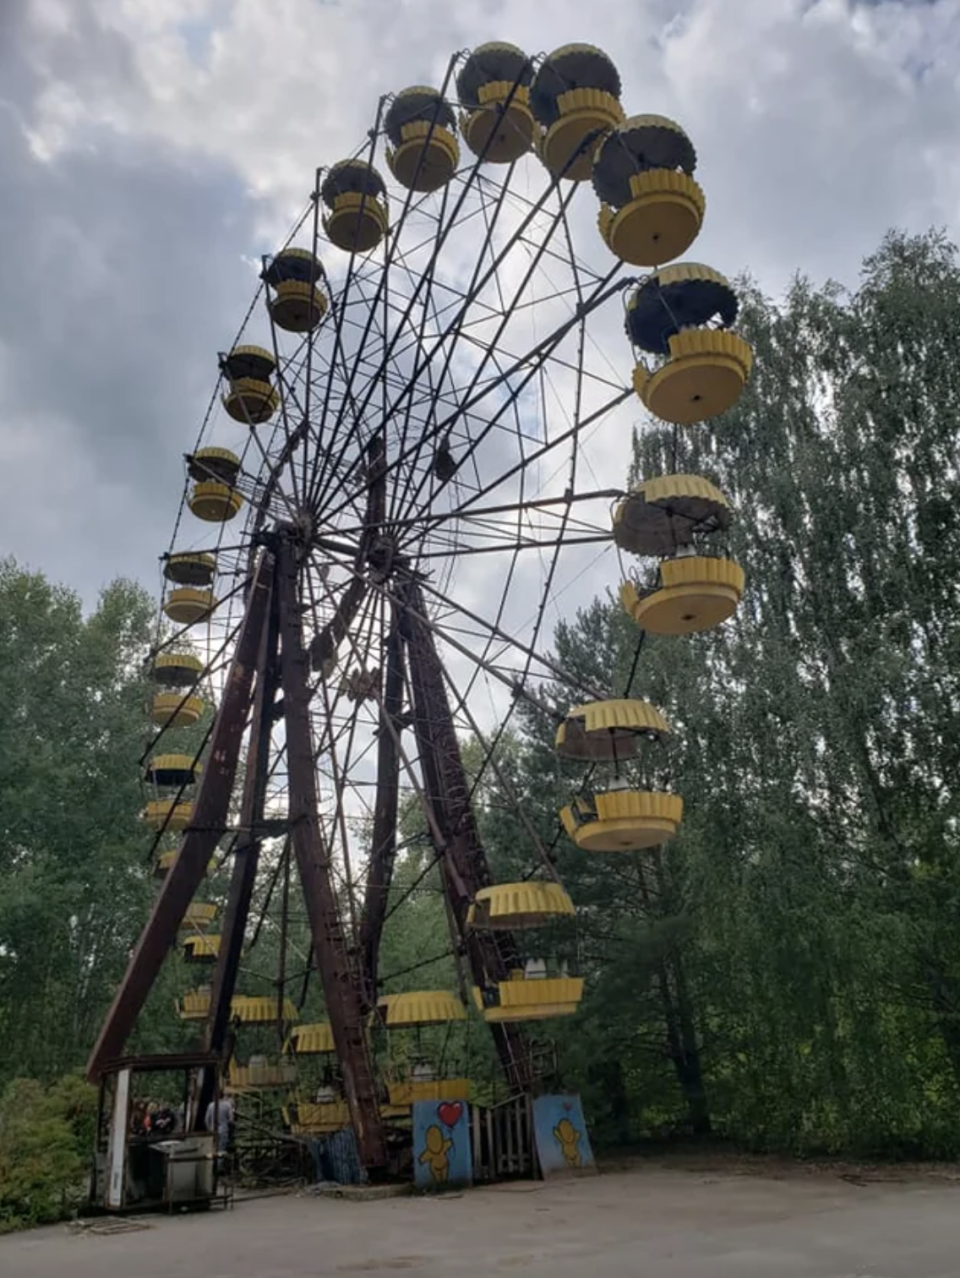 An inoperable Ferris wheel